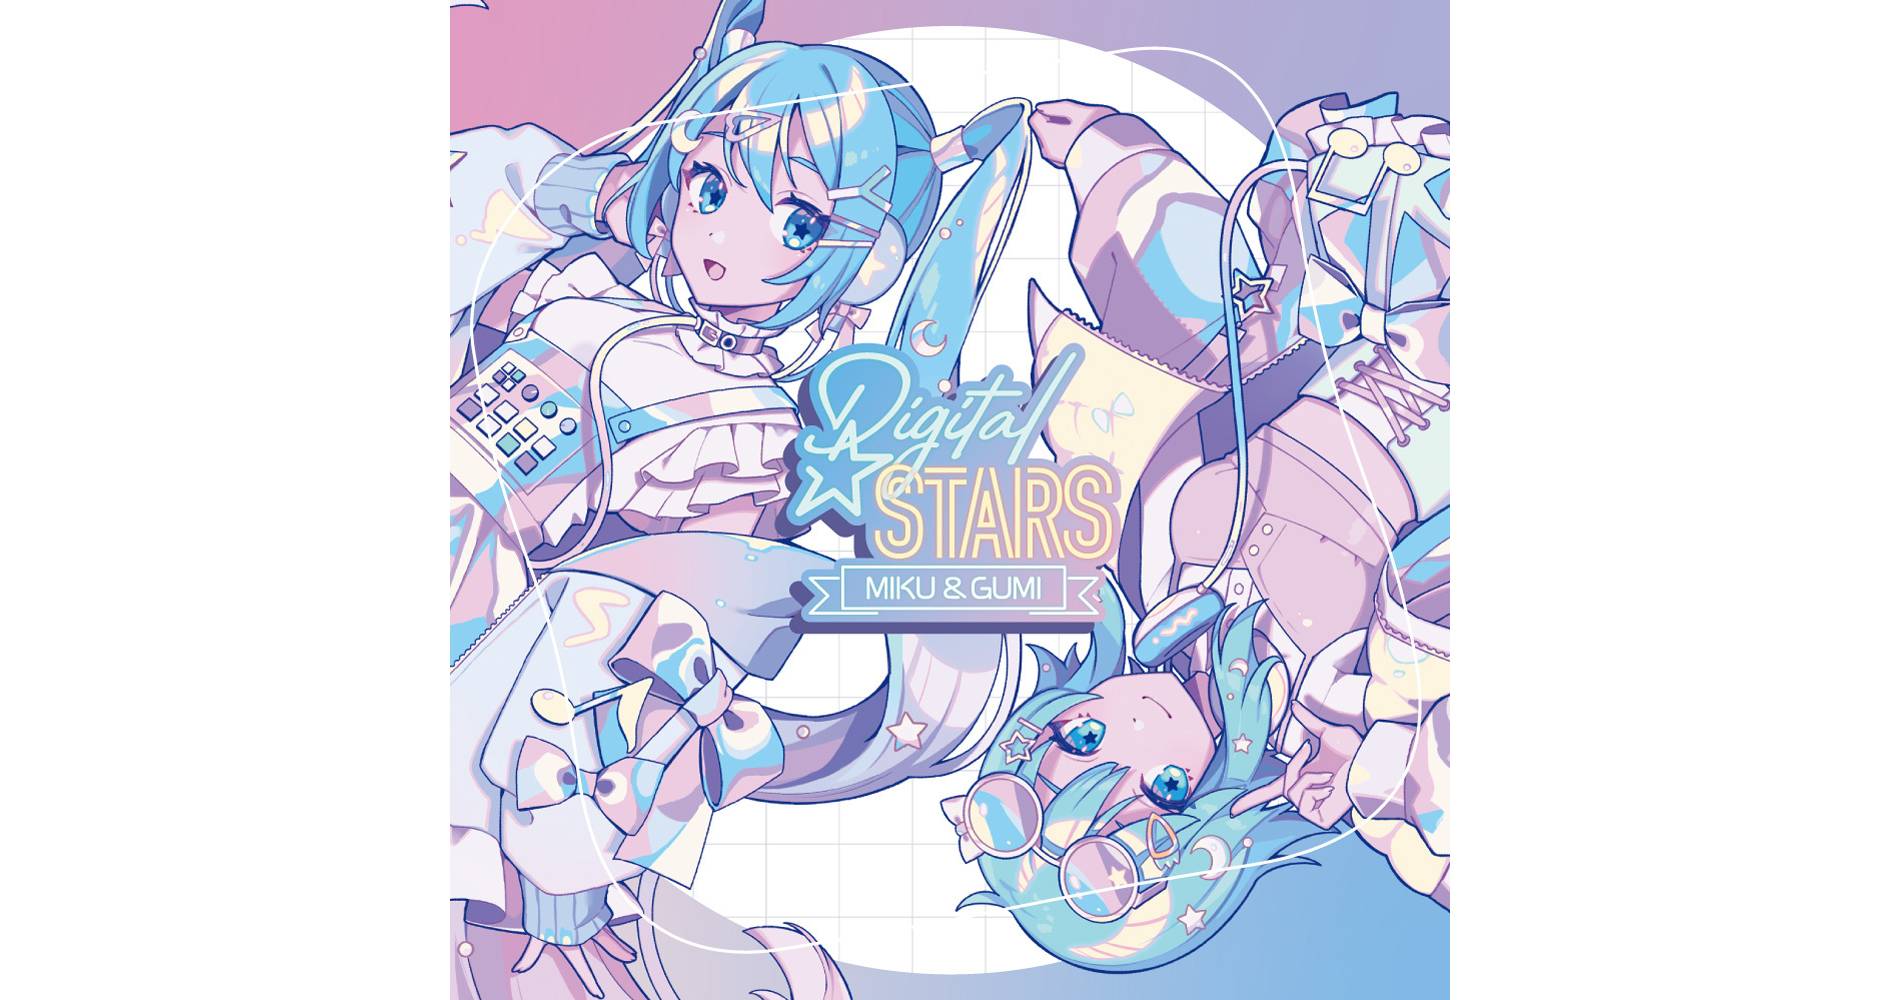 Digital-Stars-feat.-MIKU-GUMI-Compilation-CD1